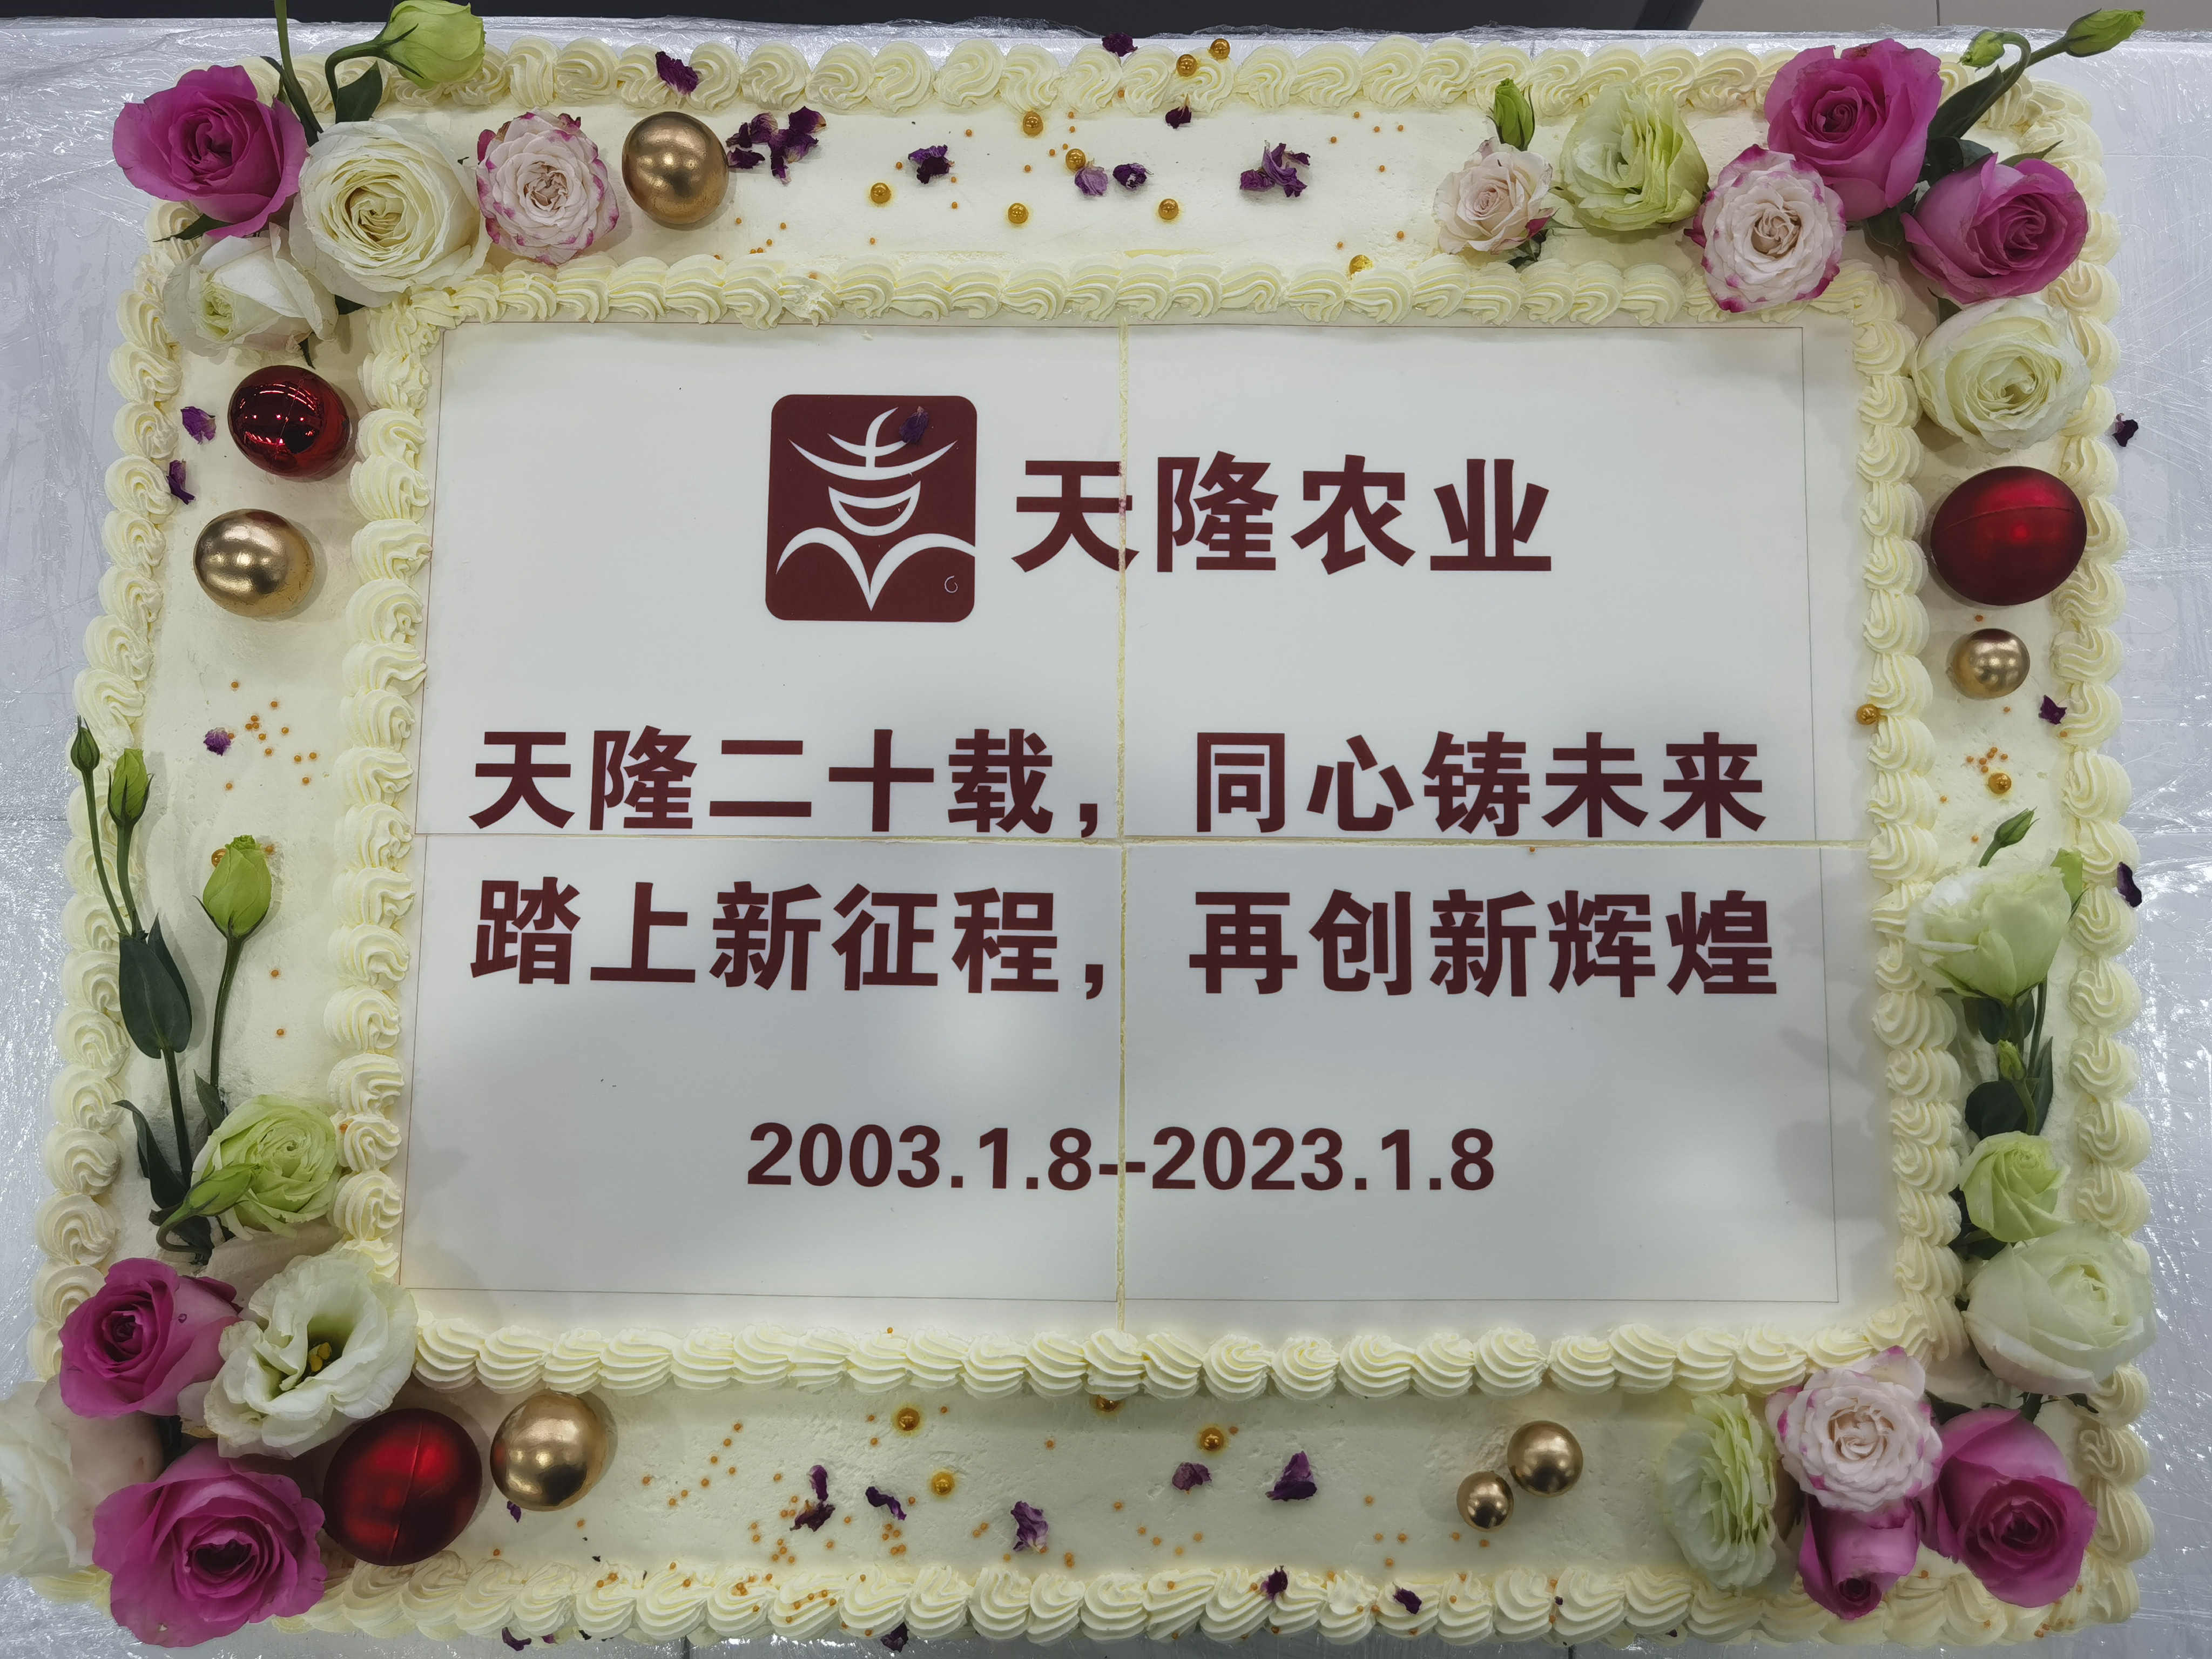 20th Anniversary of the Establishment of Chongqing Hetianlong Company